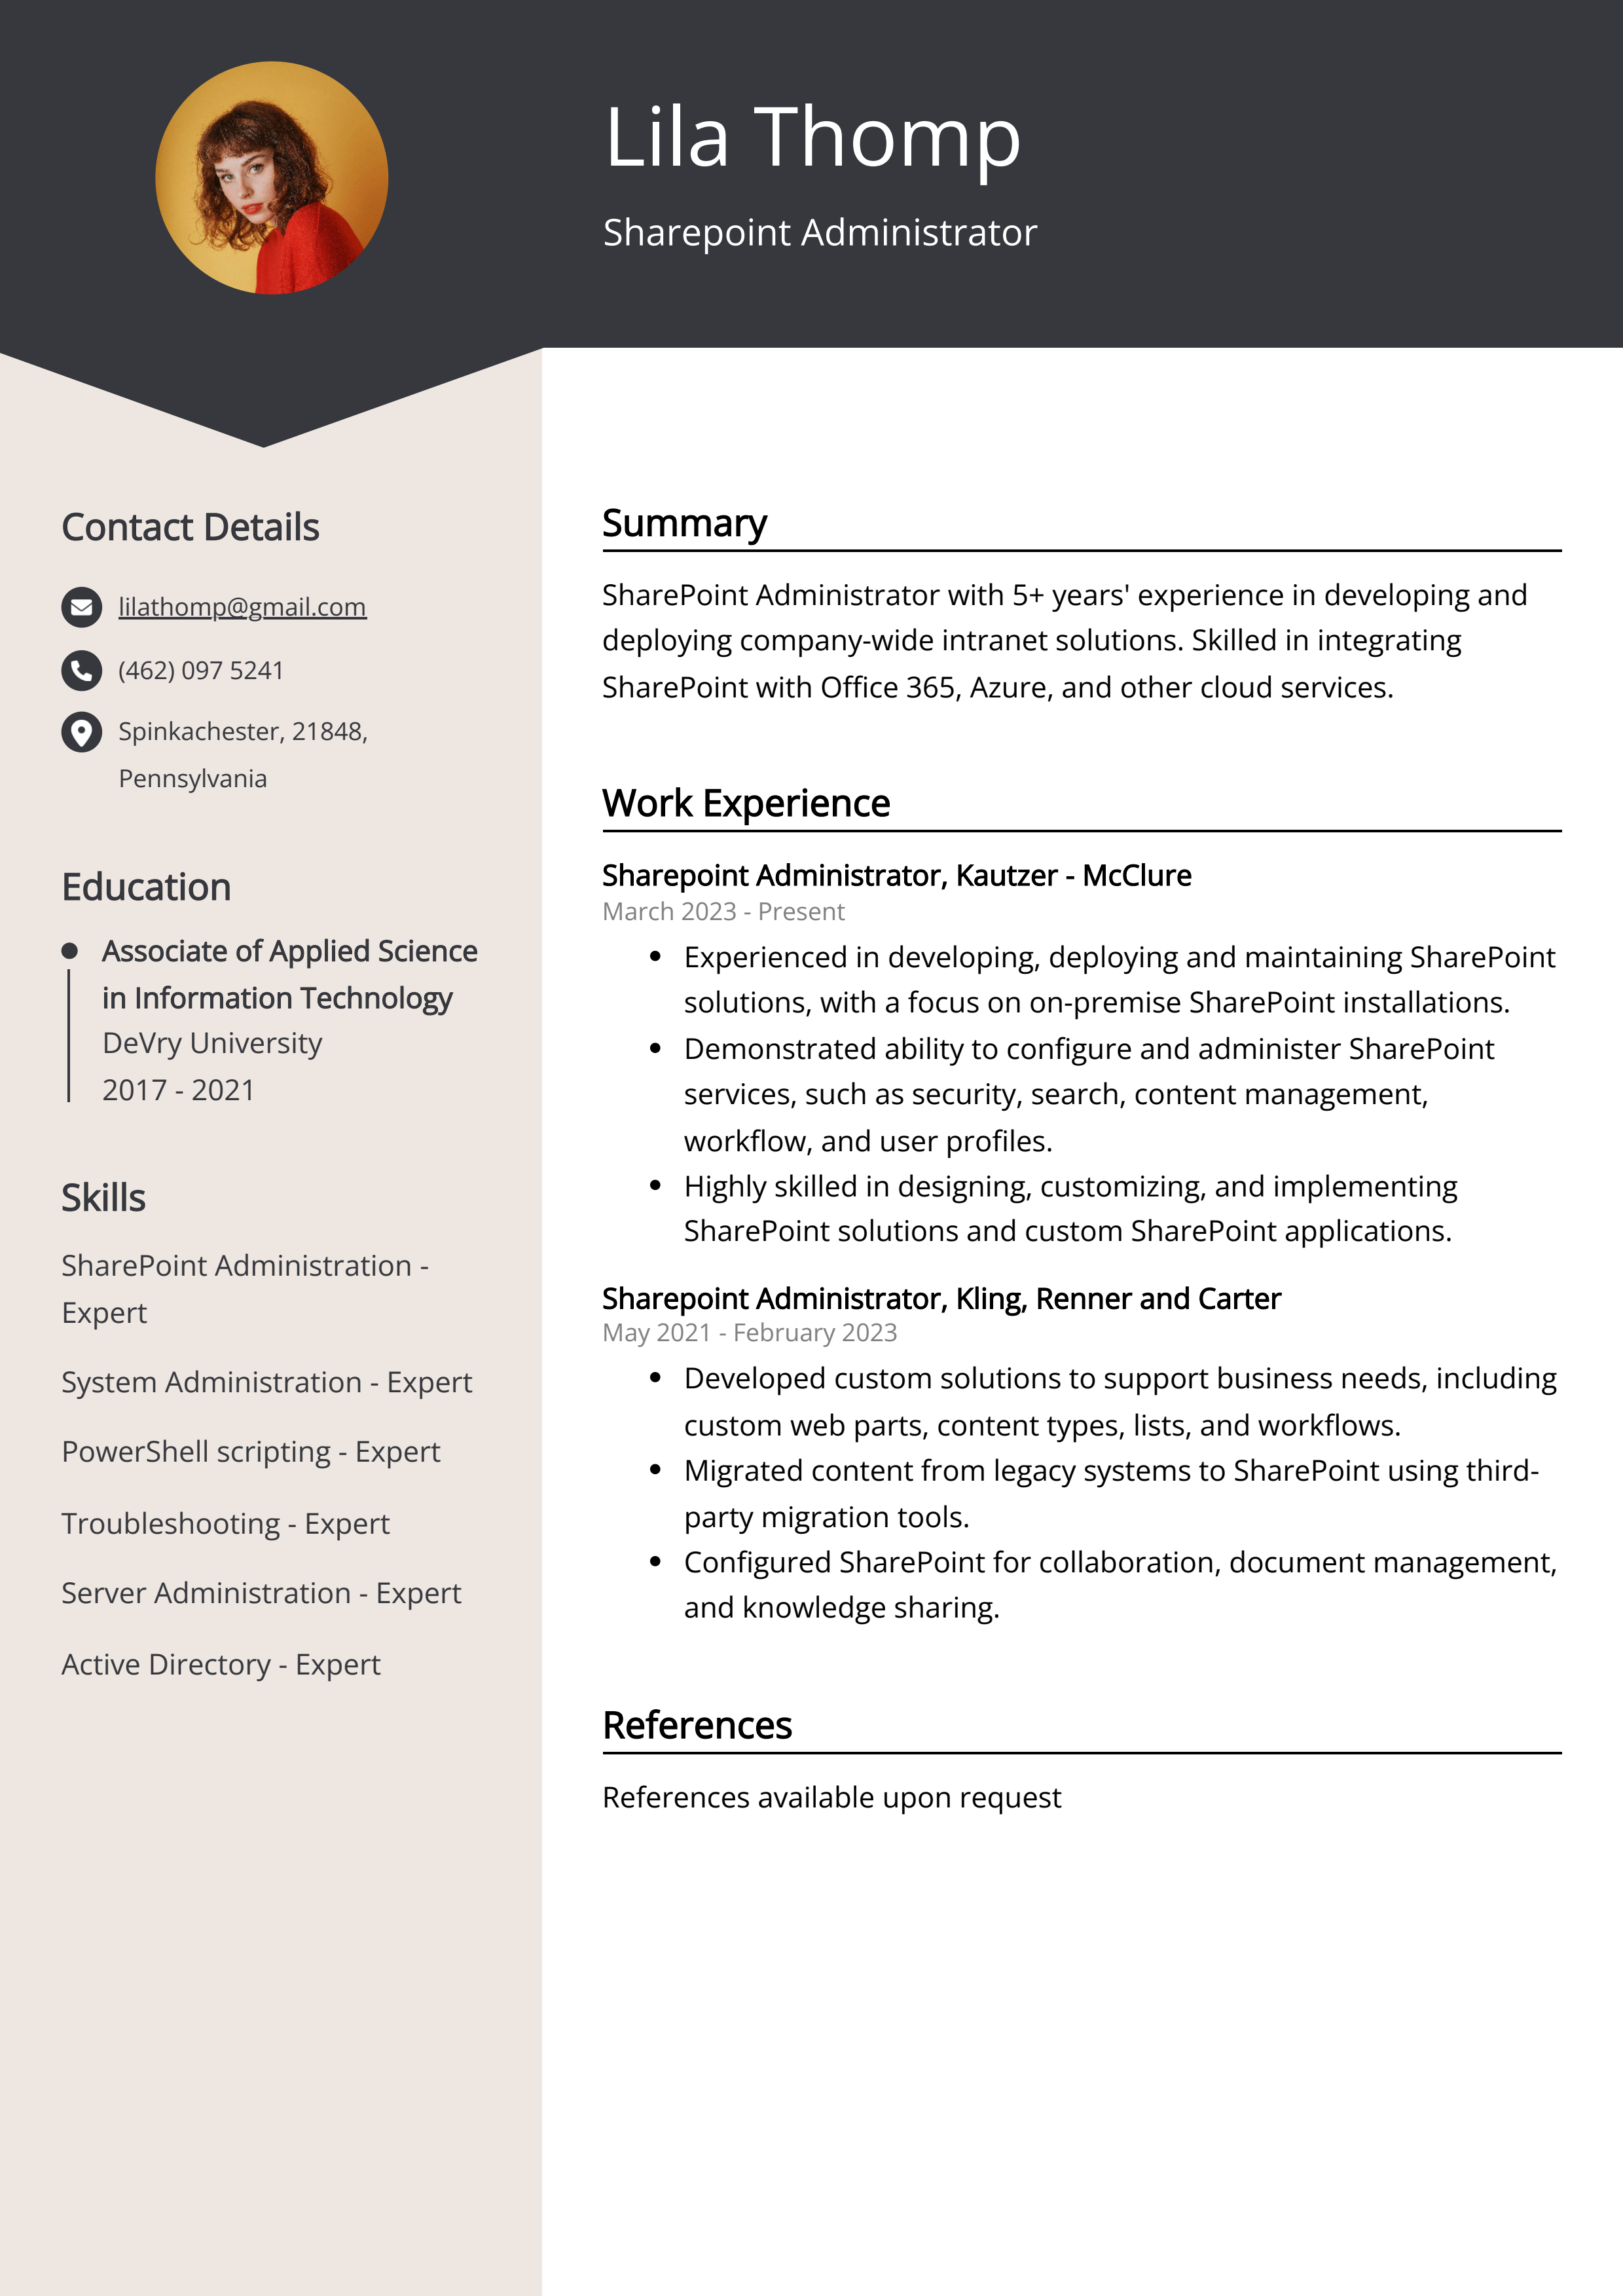 Sharepoint Administrator CV Example